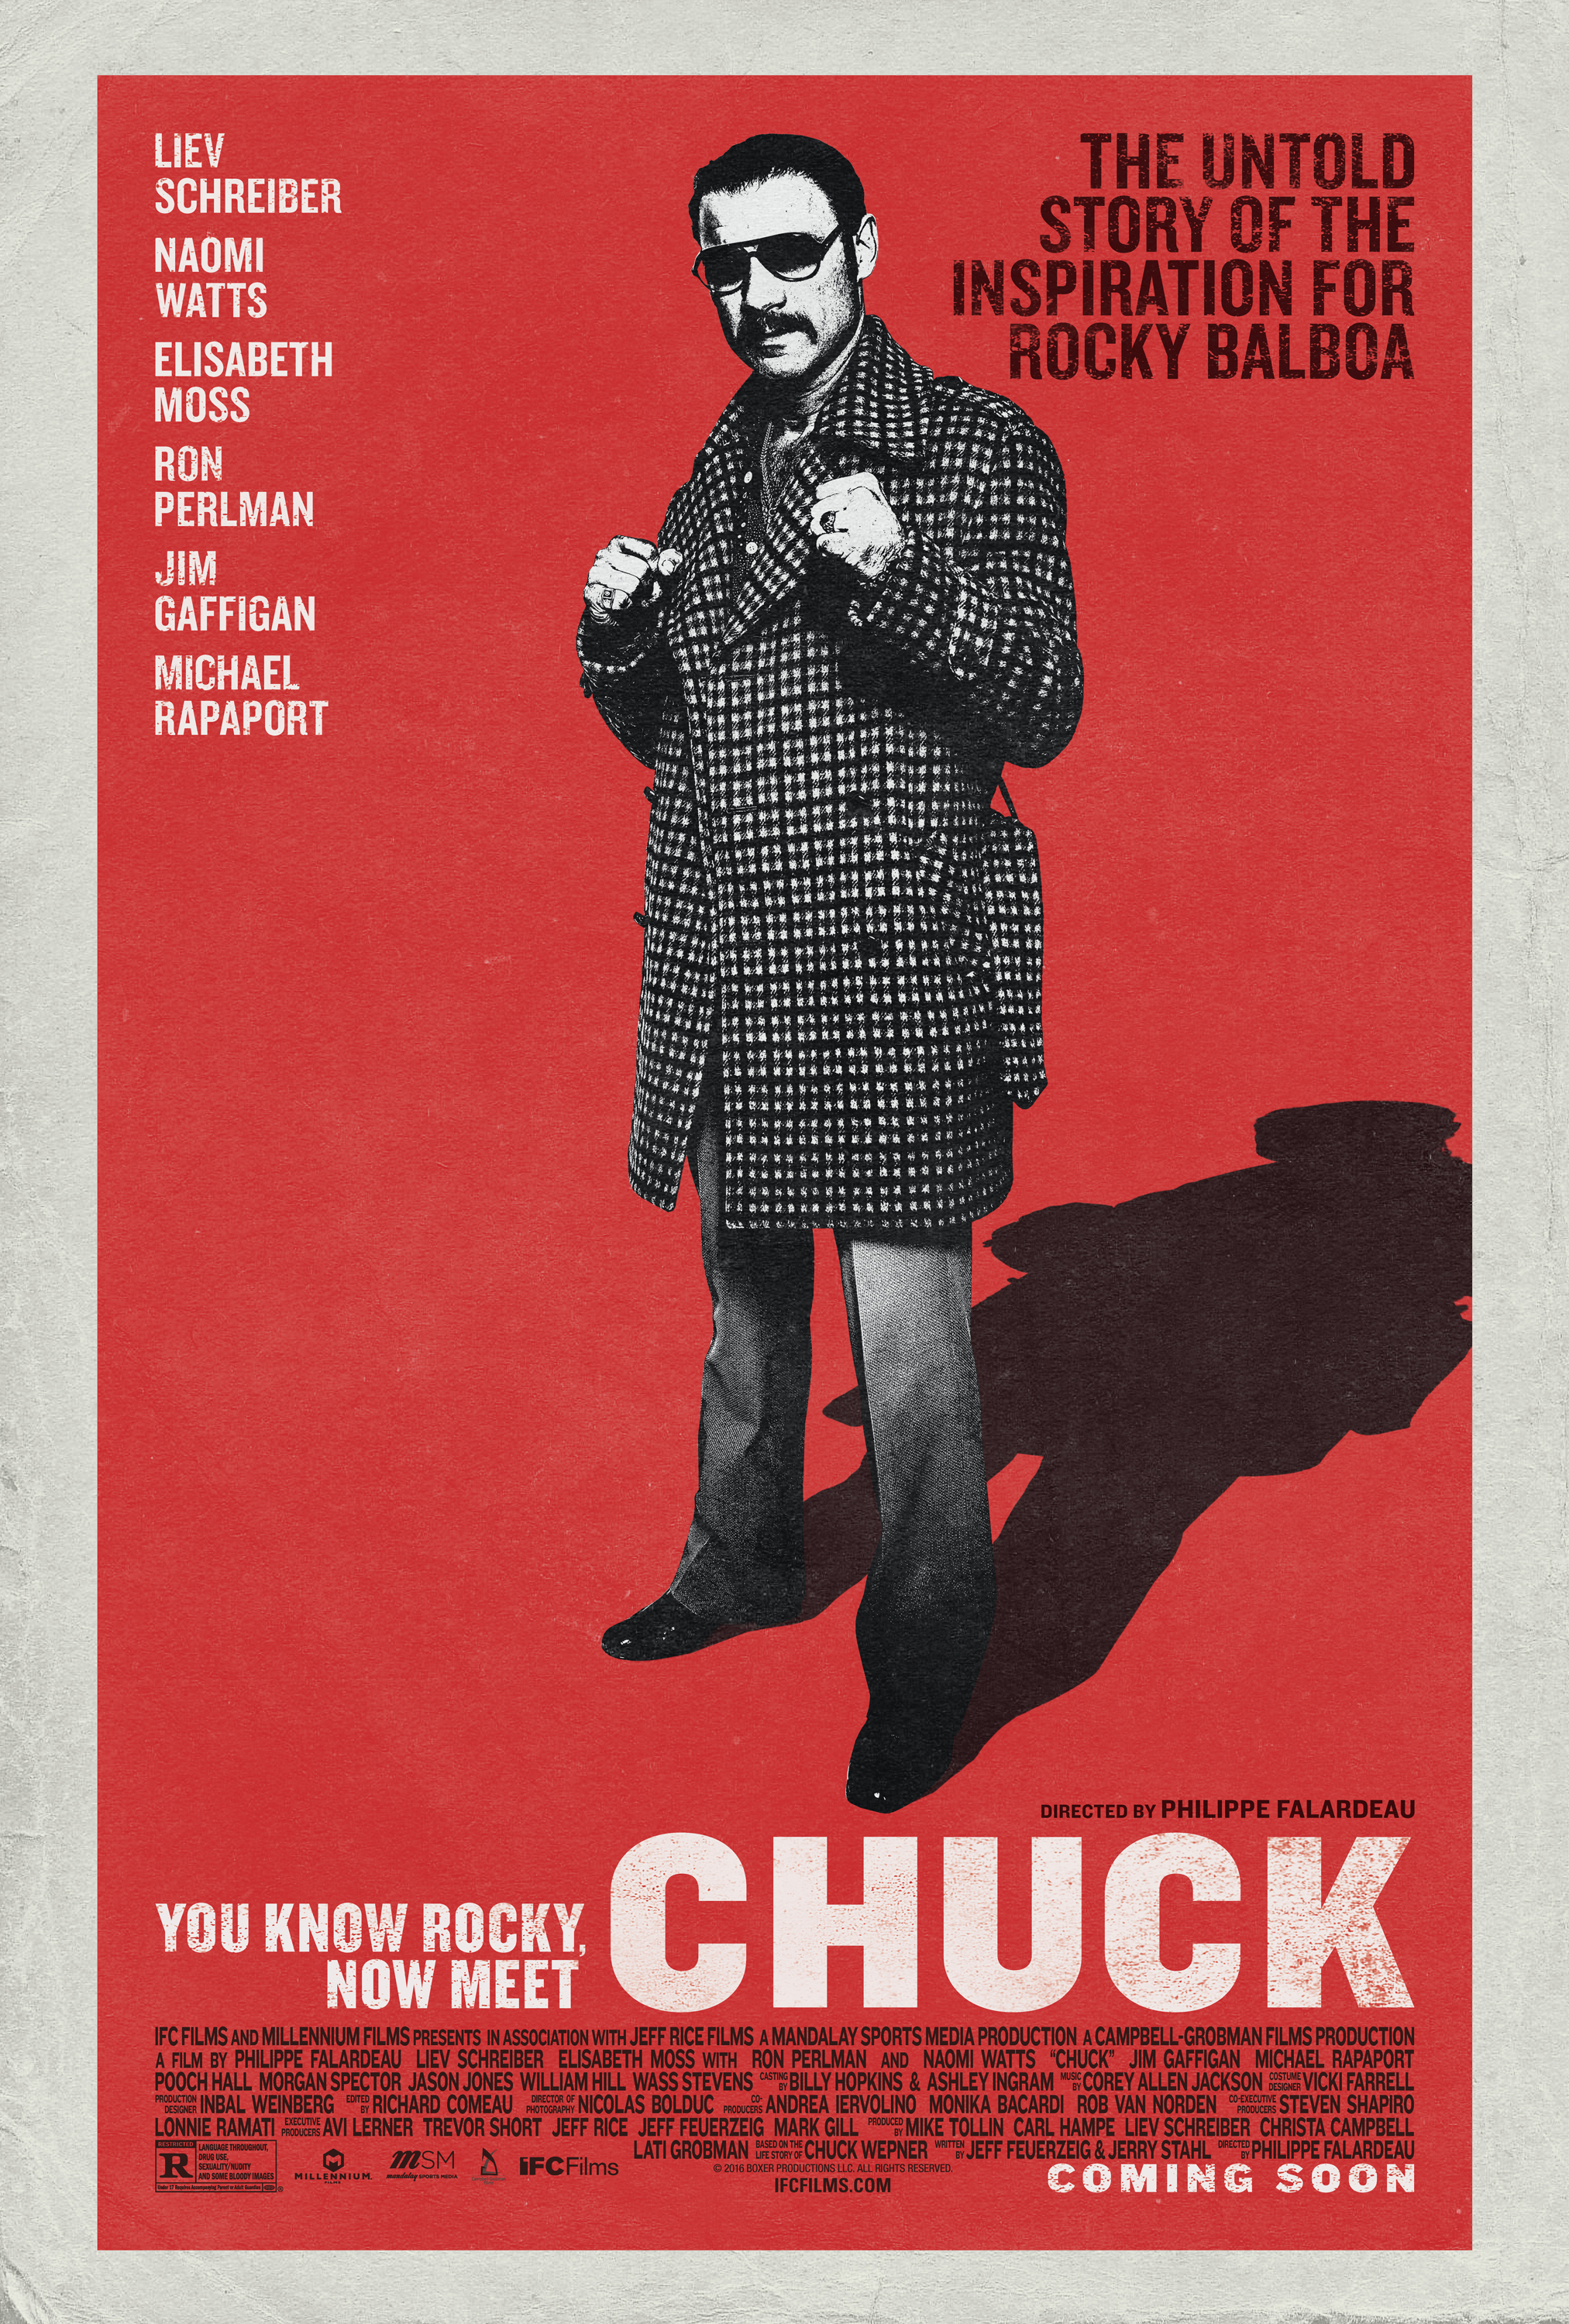 Chuck (2017) Main Poster